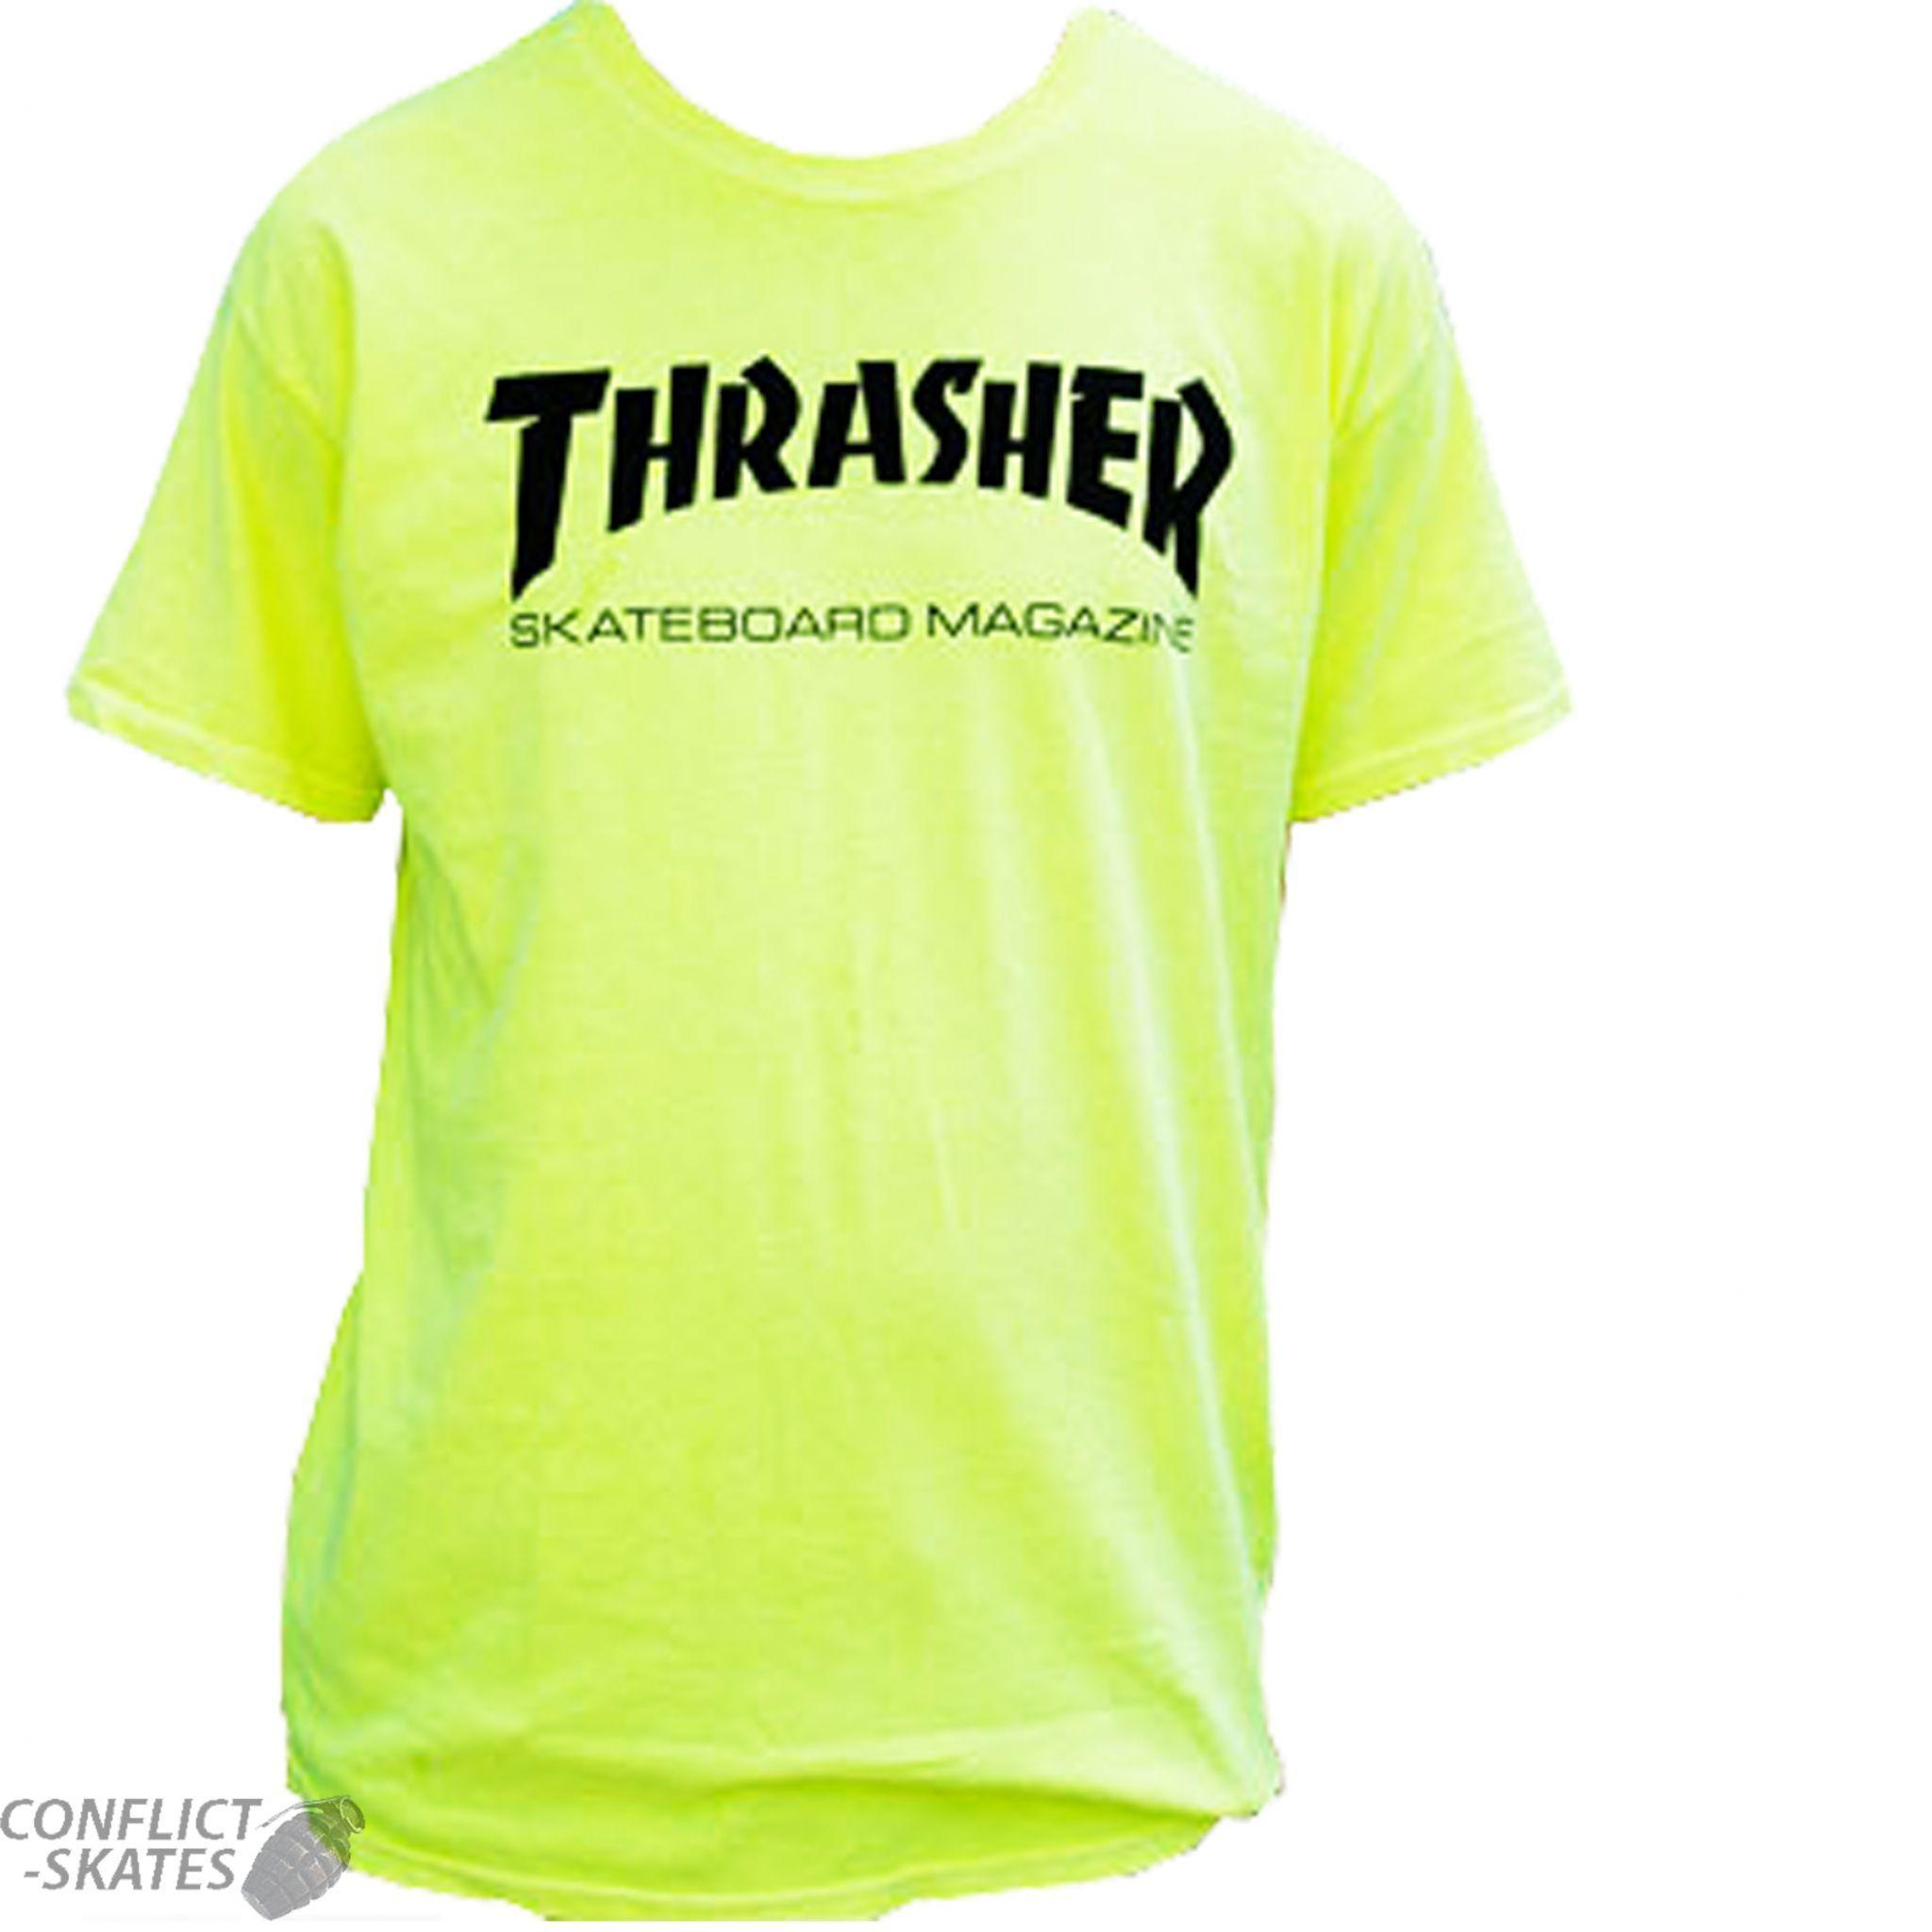 Cool Neon Thrasher Logo - THRASHER MAGAZINE Skate Mag Logo Skateboard T-Shirt Neon Yellow S M or L